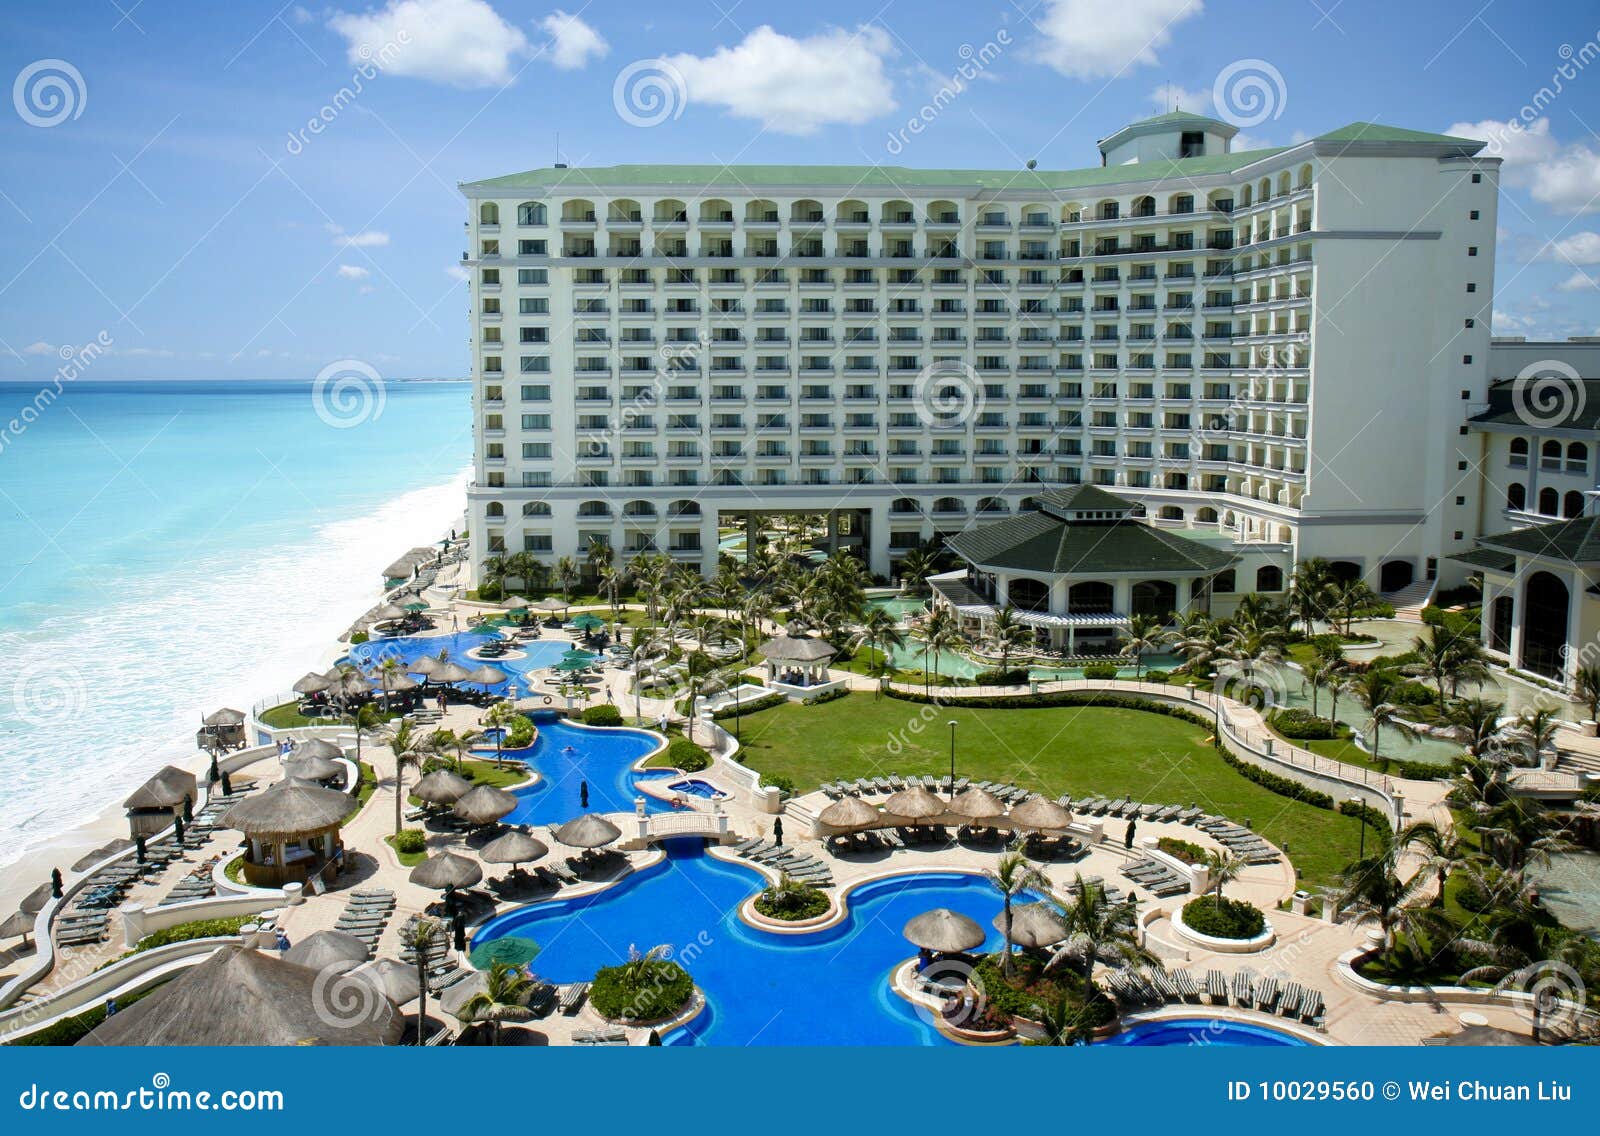 cancun resort aerial view